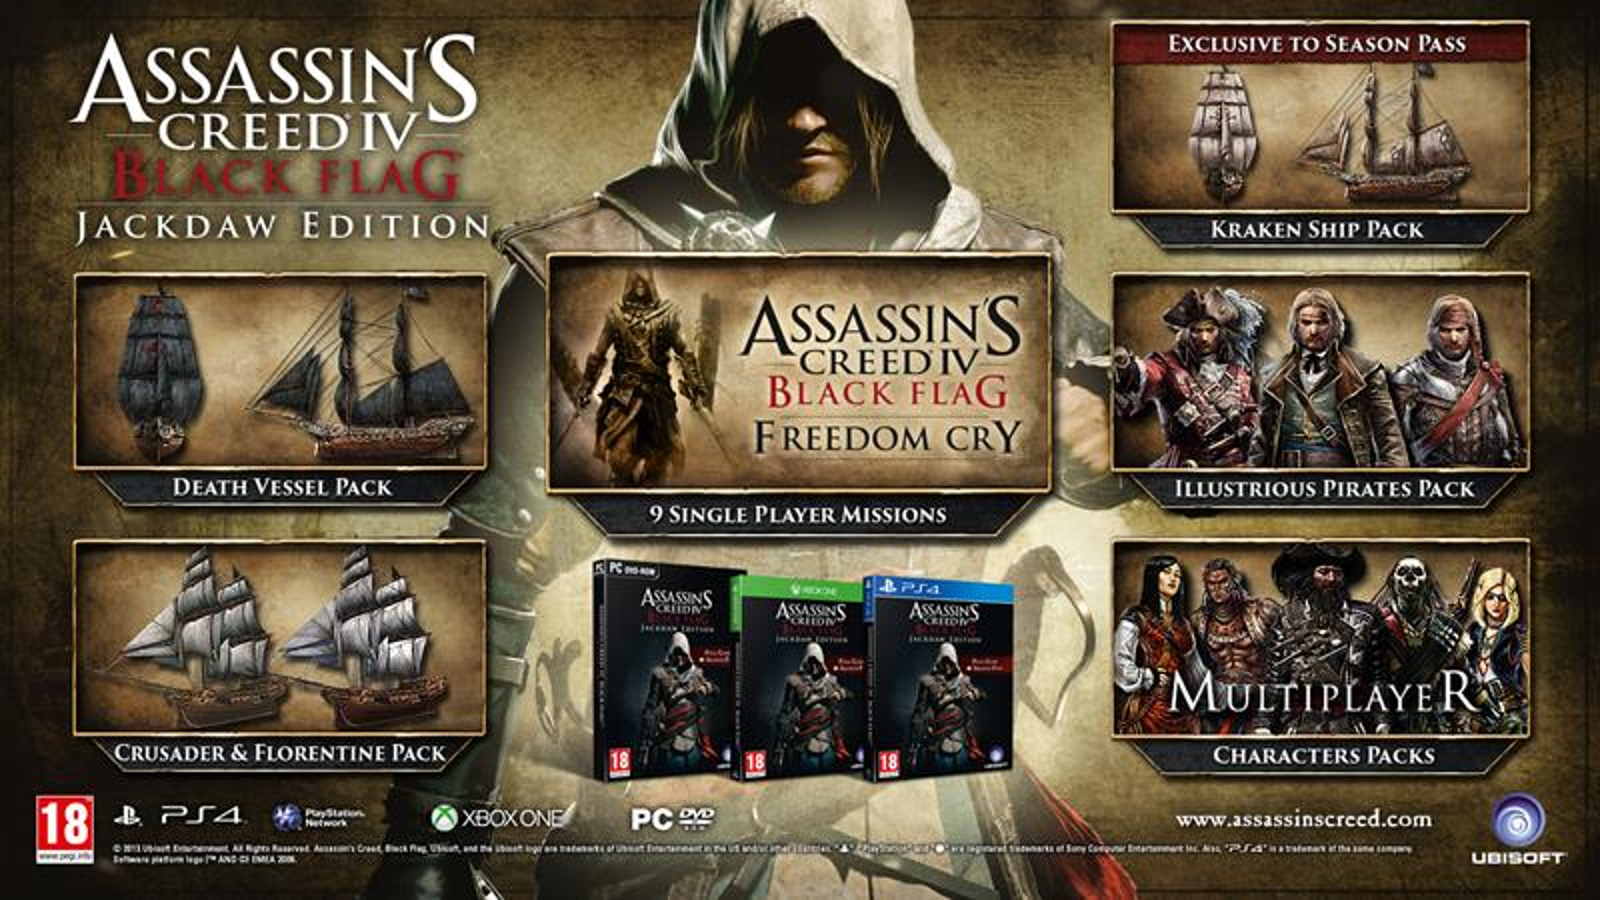 Assassin's Creed: Black Flag Sequel™ 